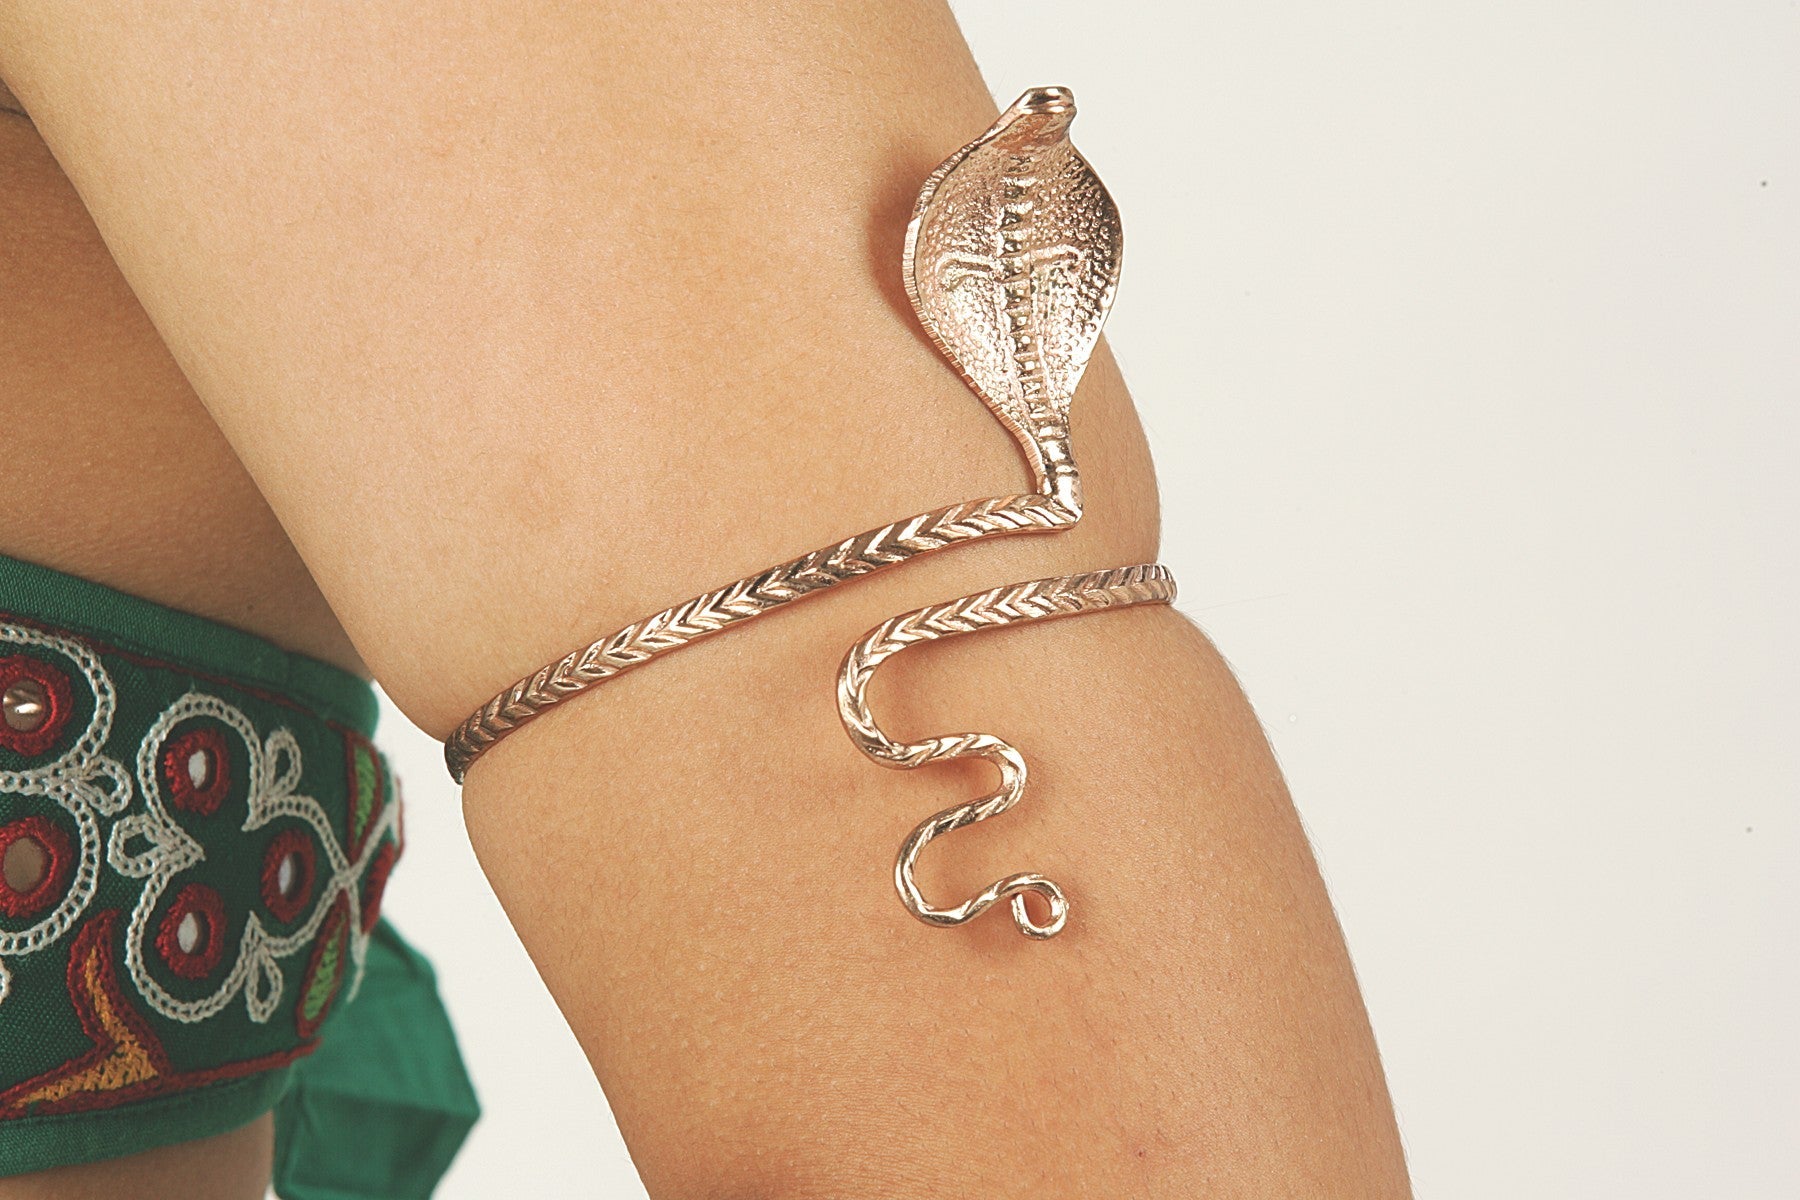 Copper-Tone Snake Upper Arm Bracelet - Exotic & Alluring Accessory